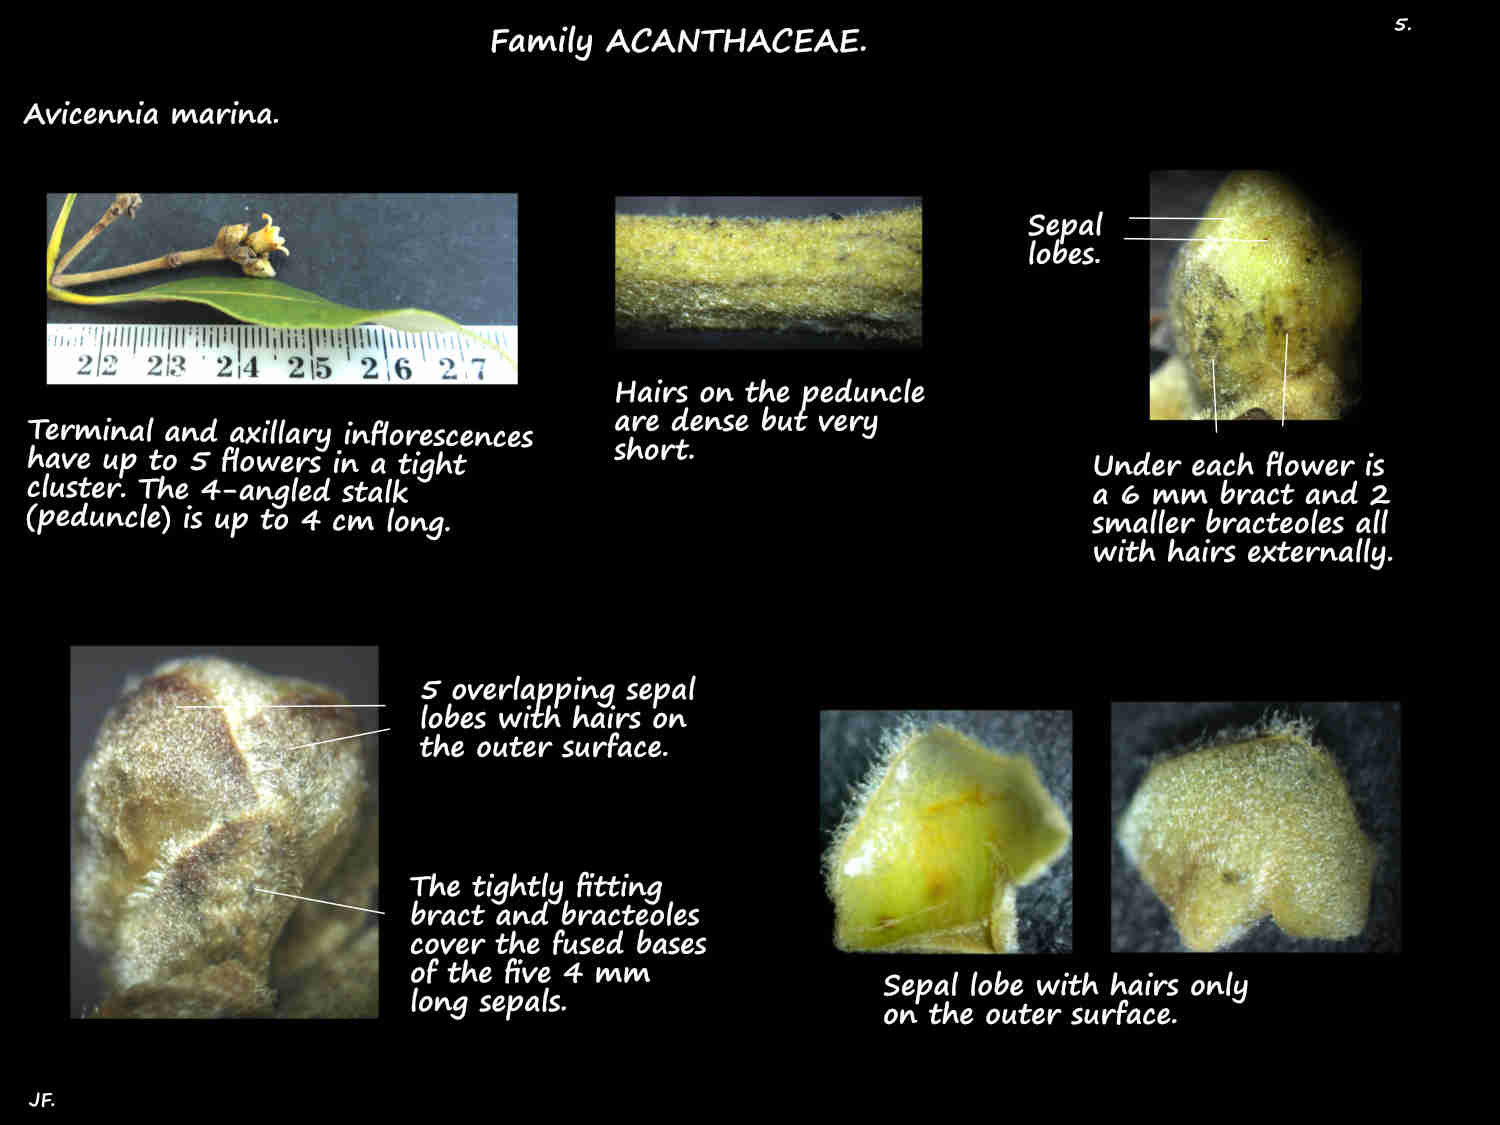 5 Avicennia marina bracts, bracteoles & sepals